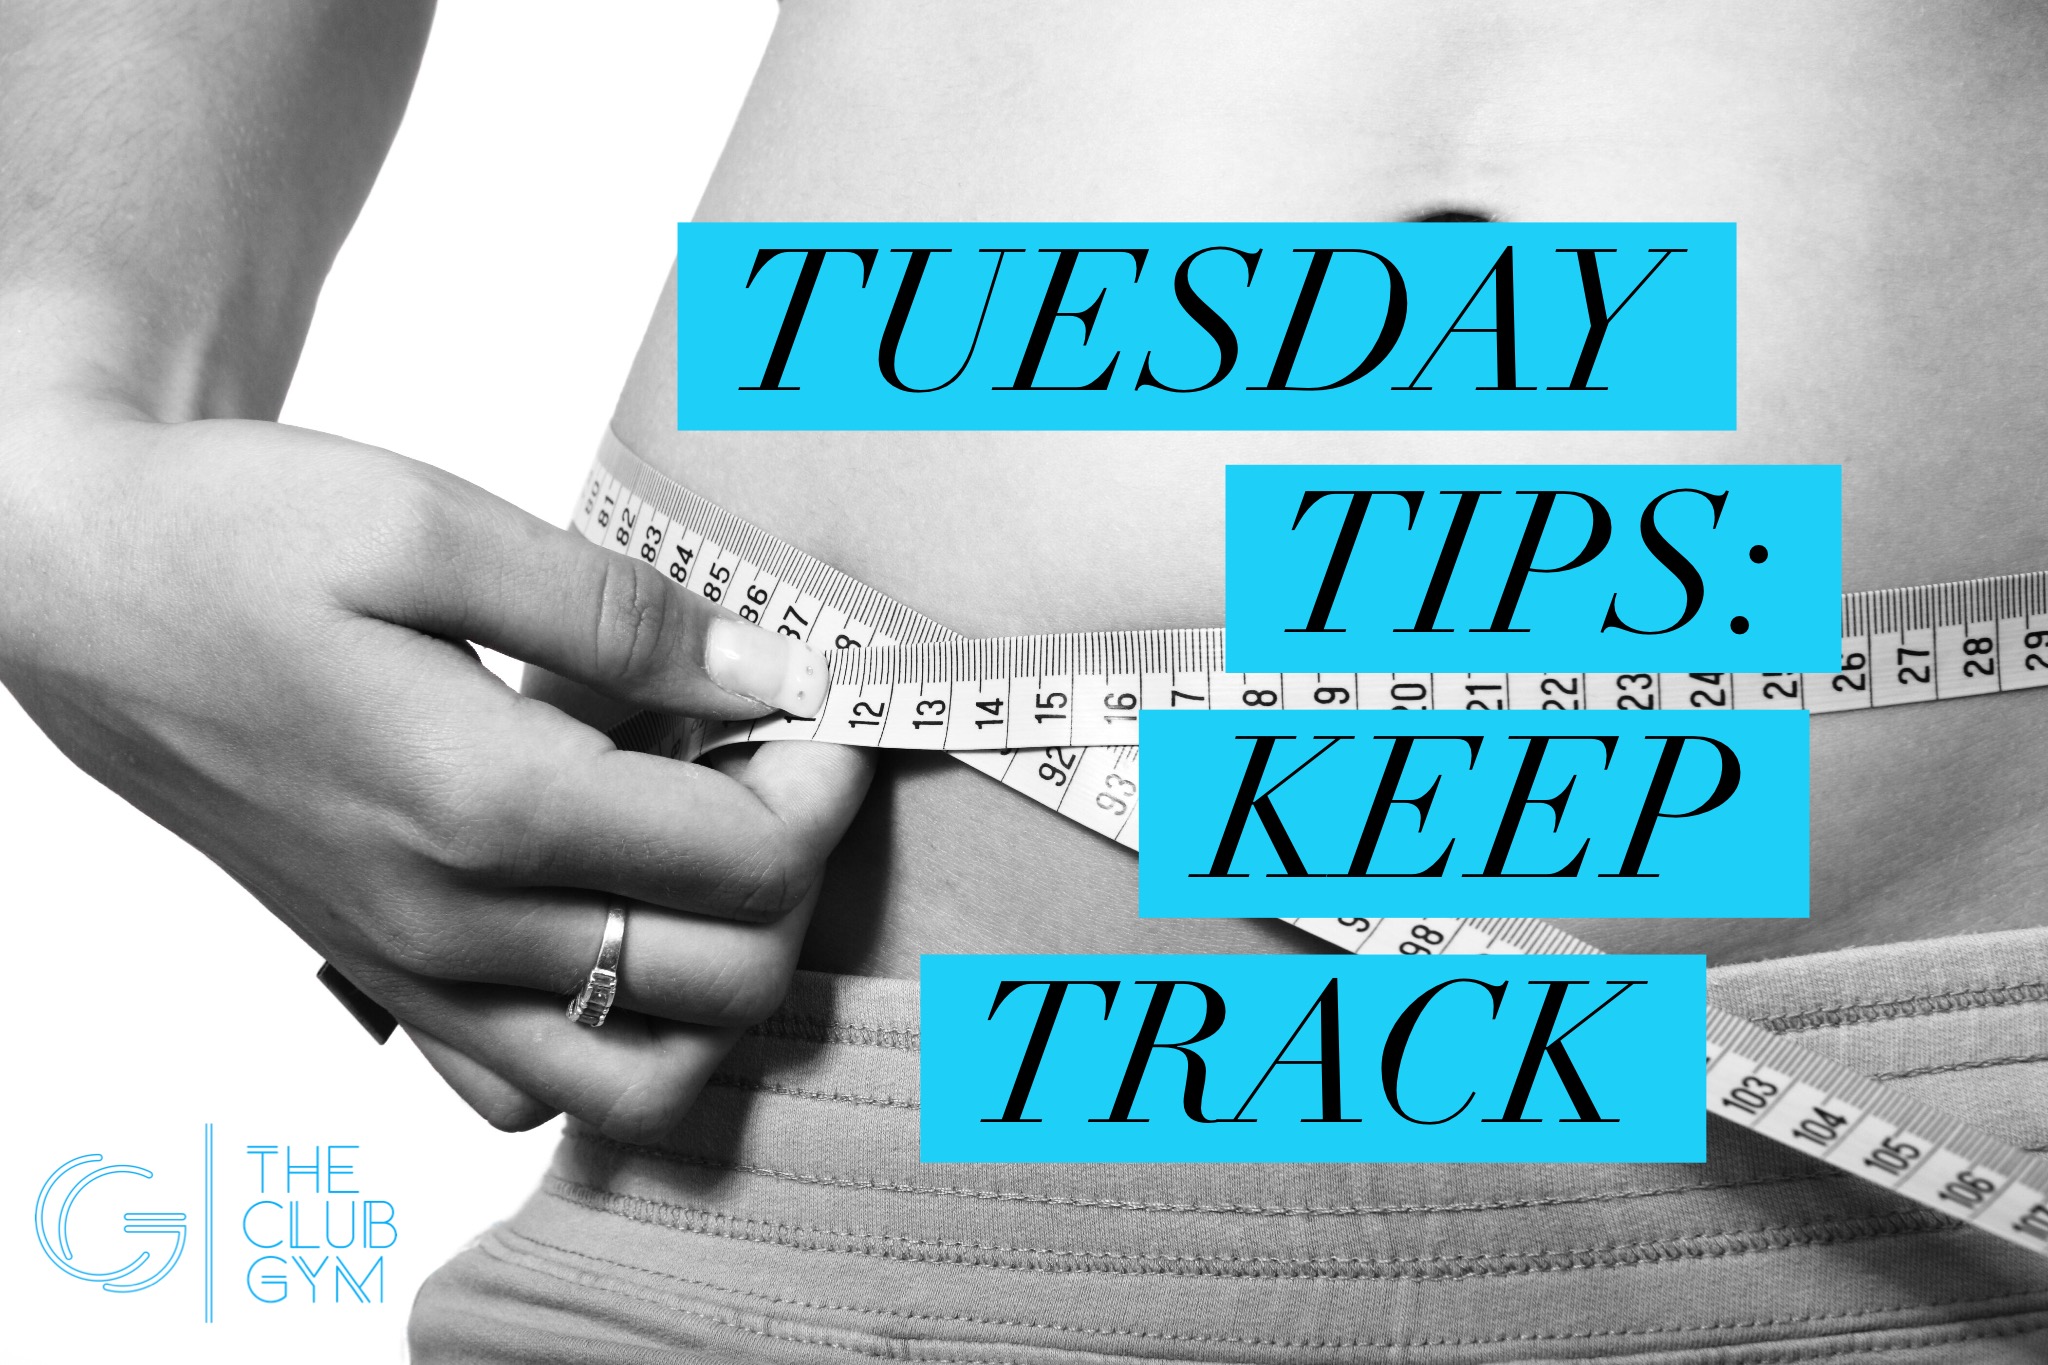 Tuesday Tips - Keep Track